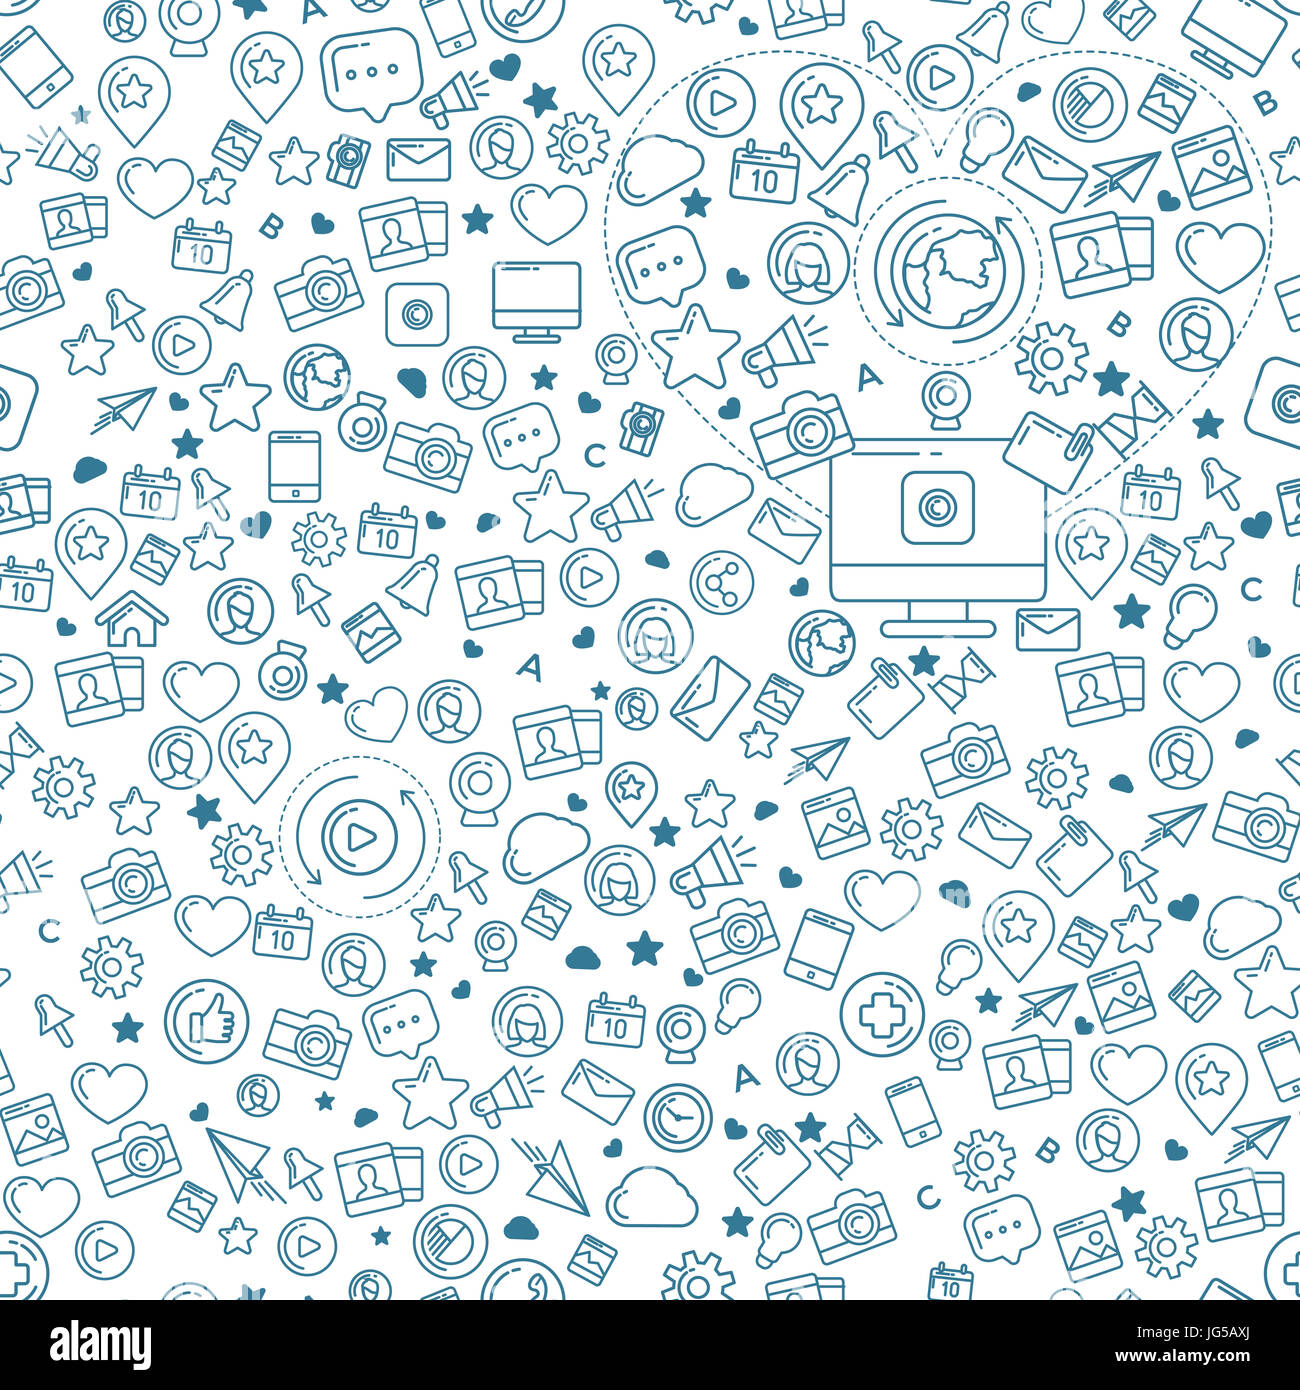 Social Media Blue Seamless Pattern Stock Photo